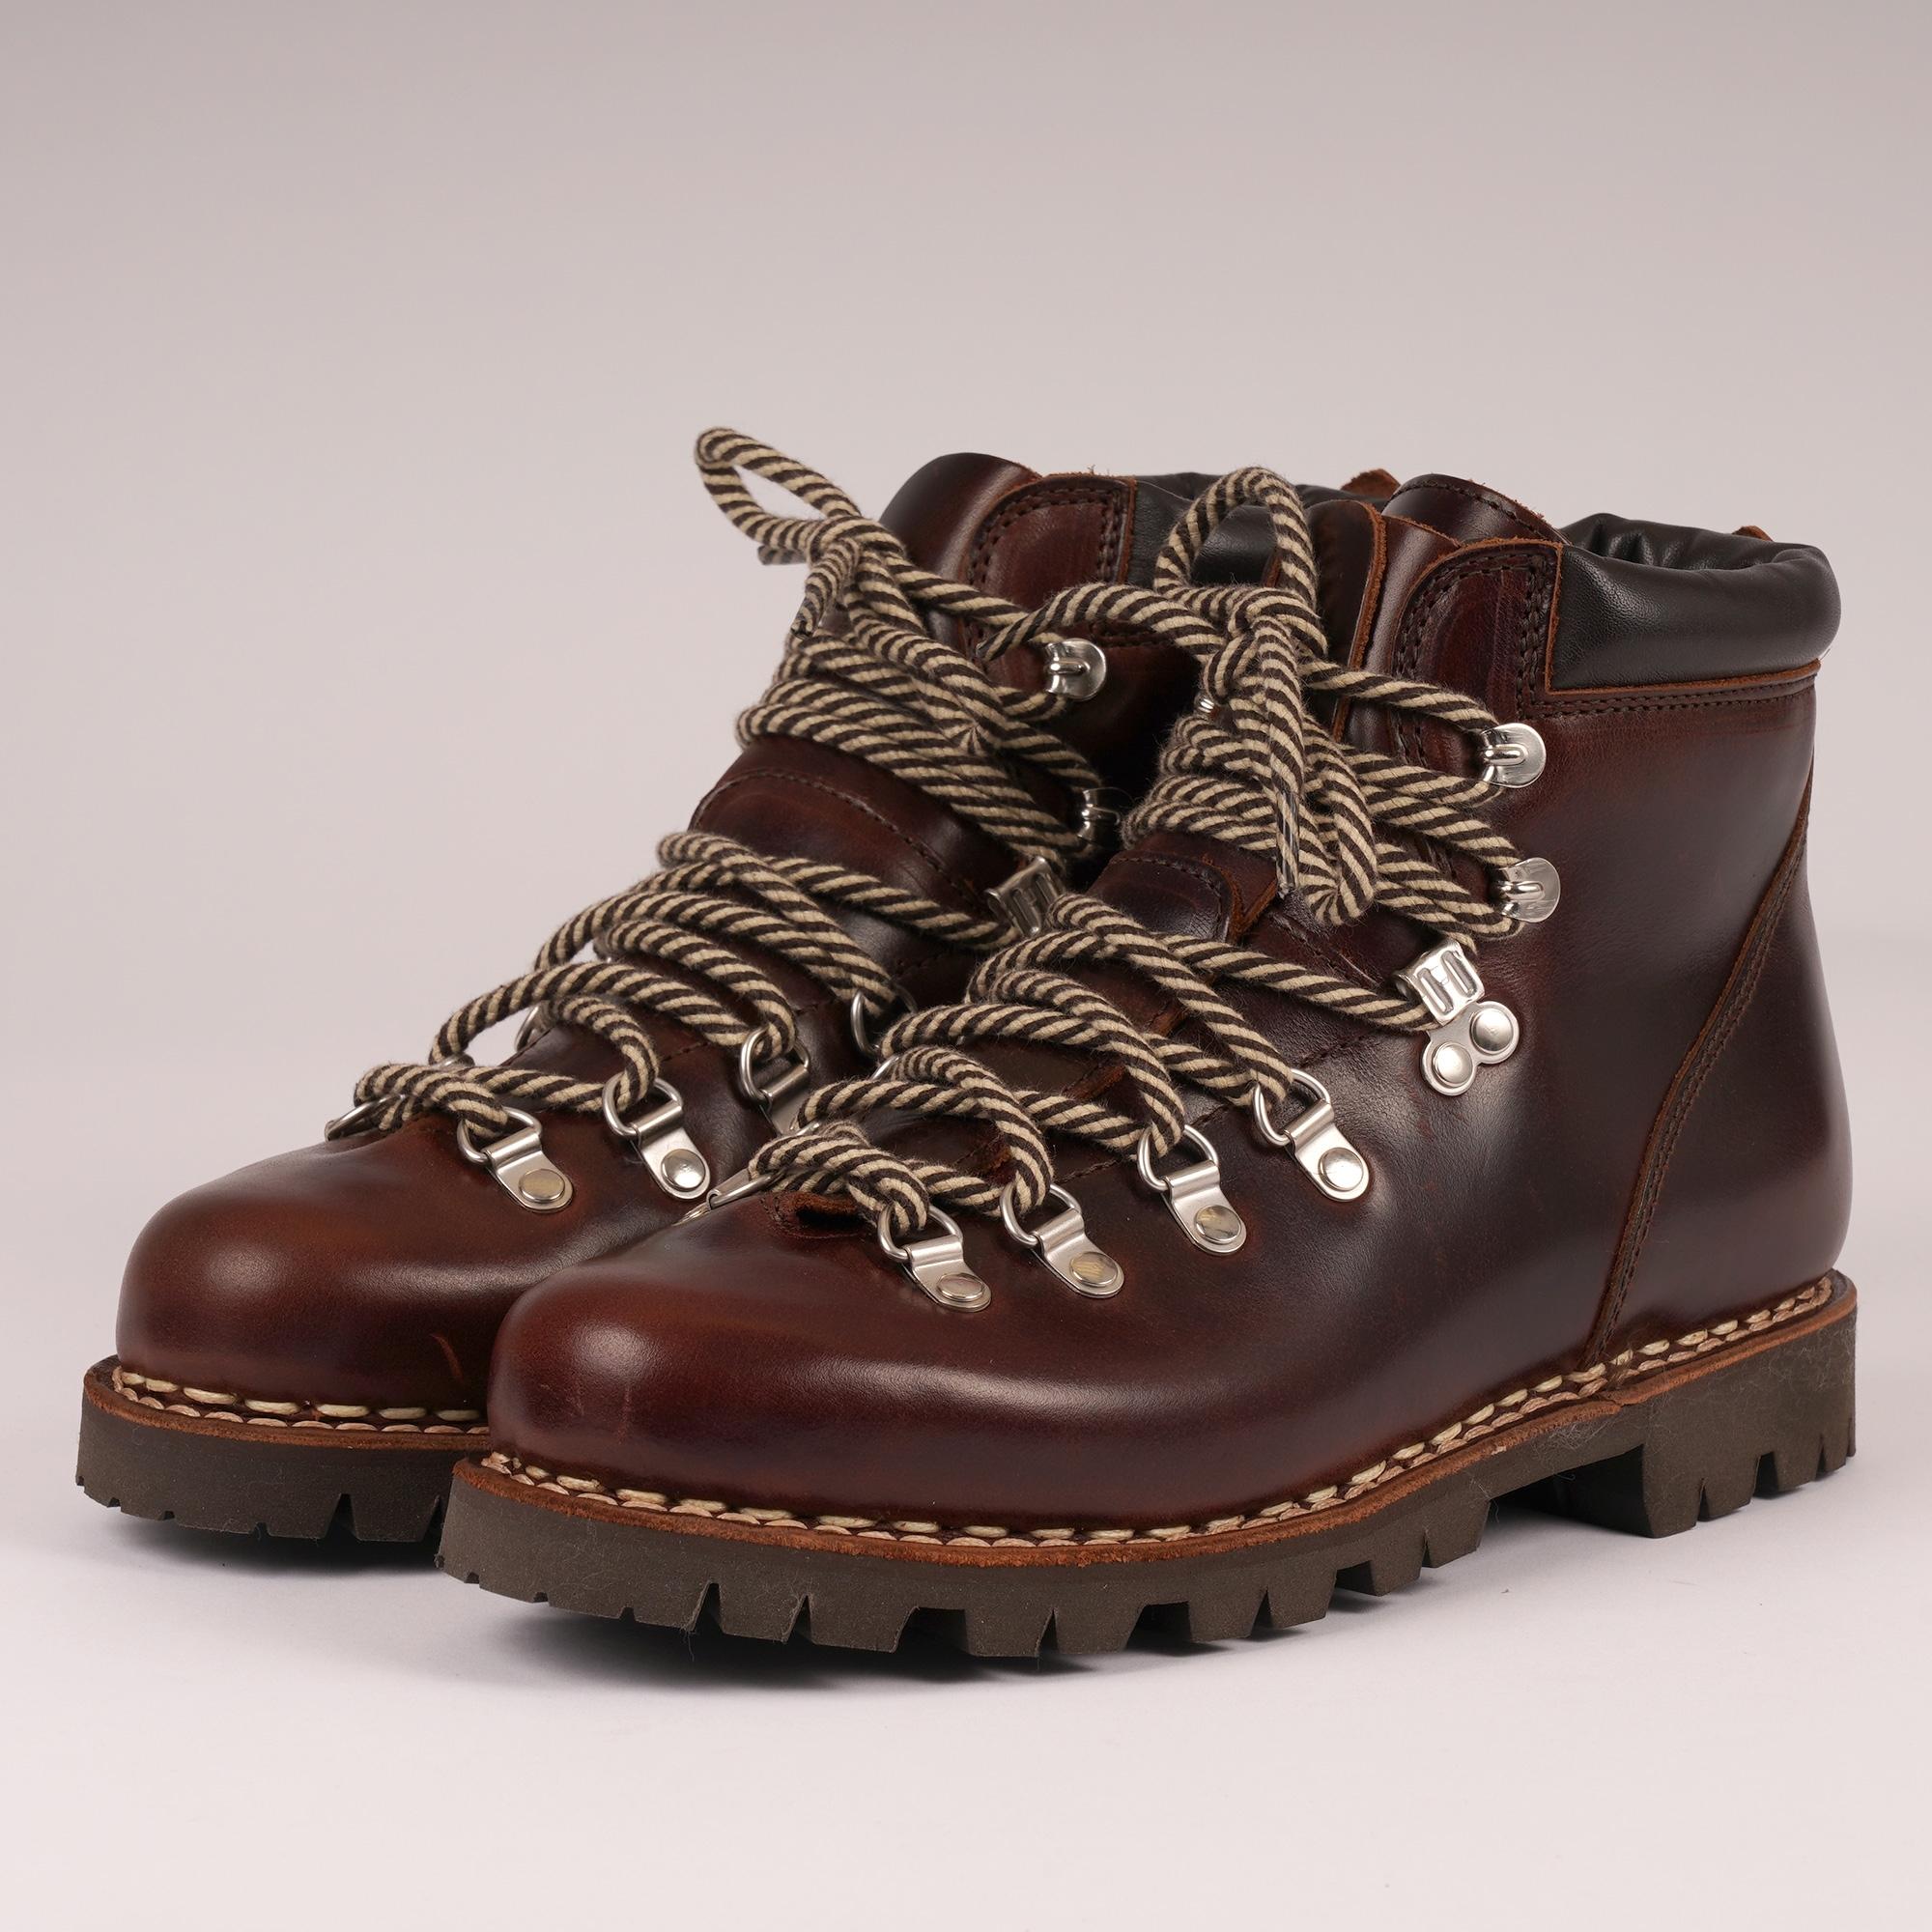 Paraboot Avoriaz Bark Marron Leather Boots 074603 for Men - Save 25% - Lyst